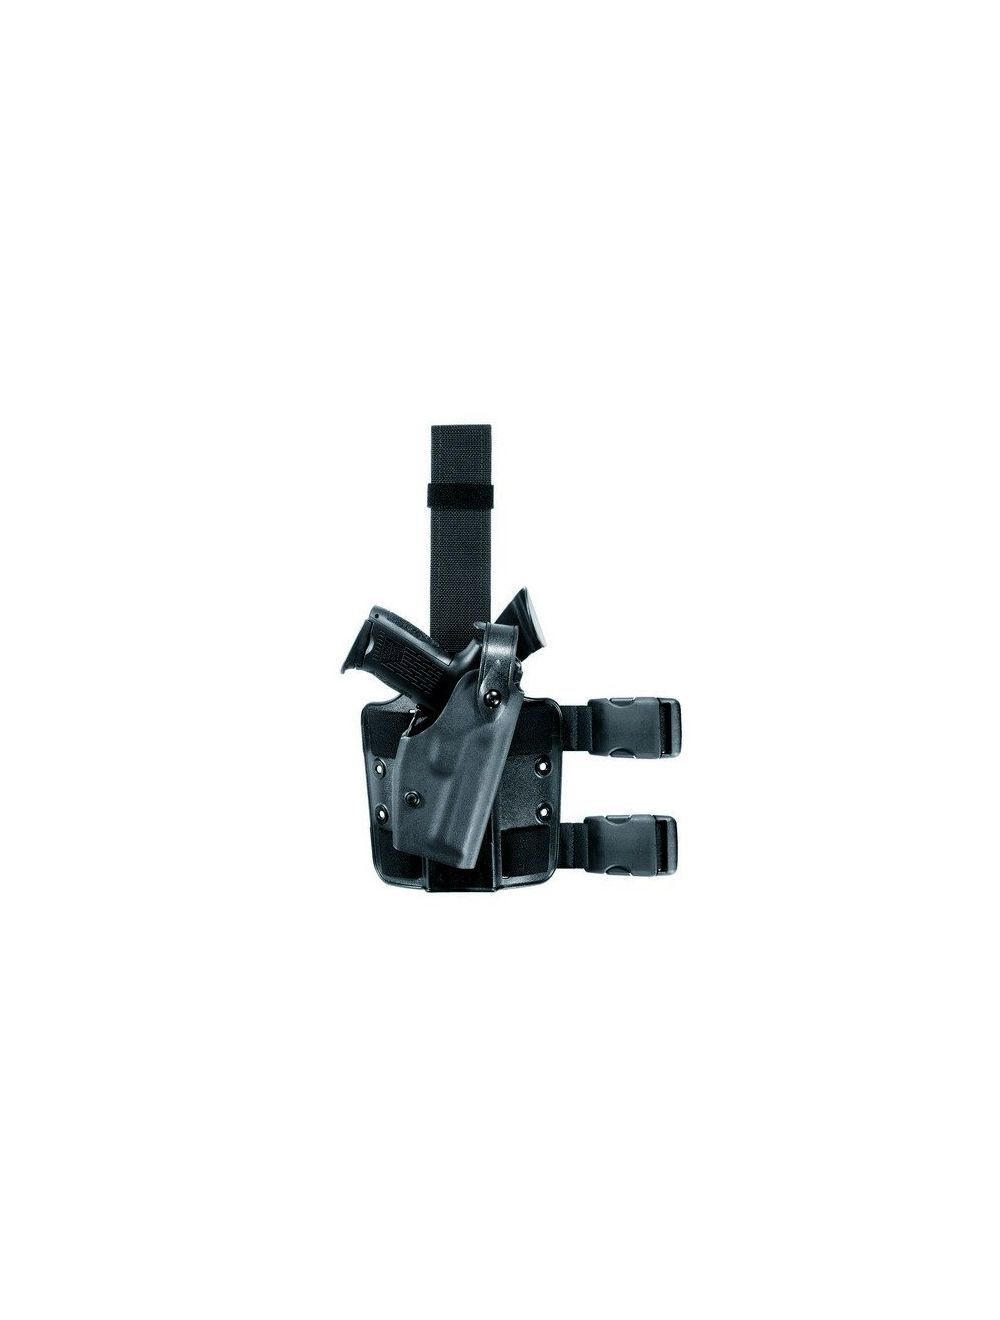 Model 6004 SLS Tactical Holster for Glock 32 w/ ITI Light